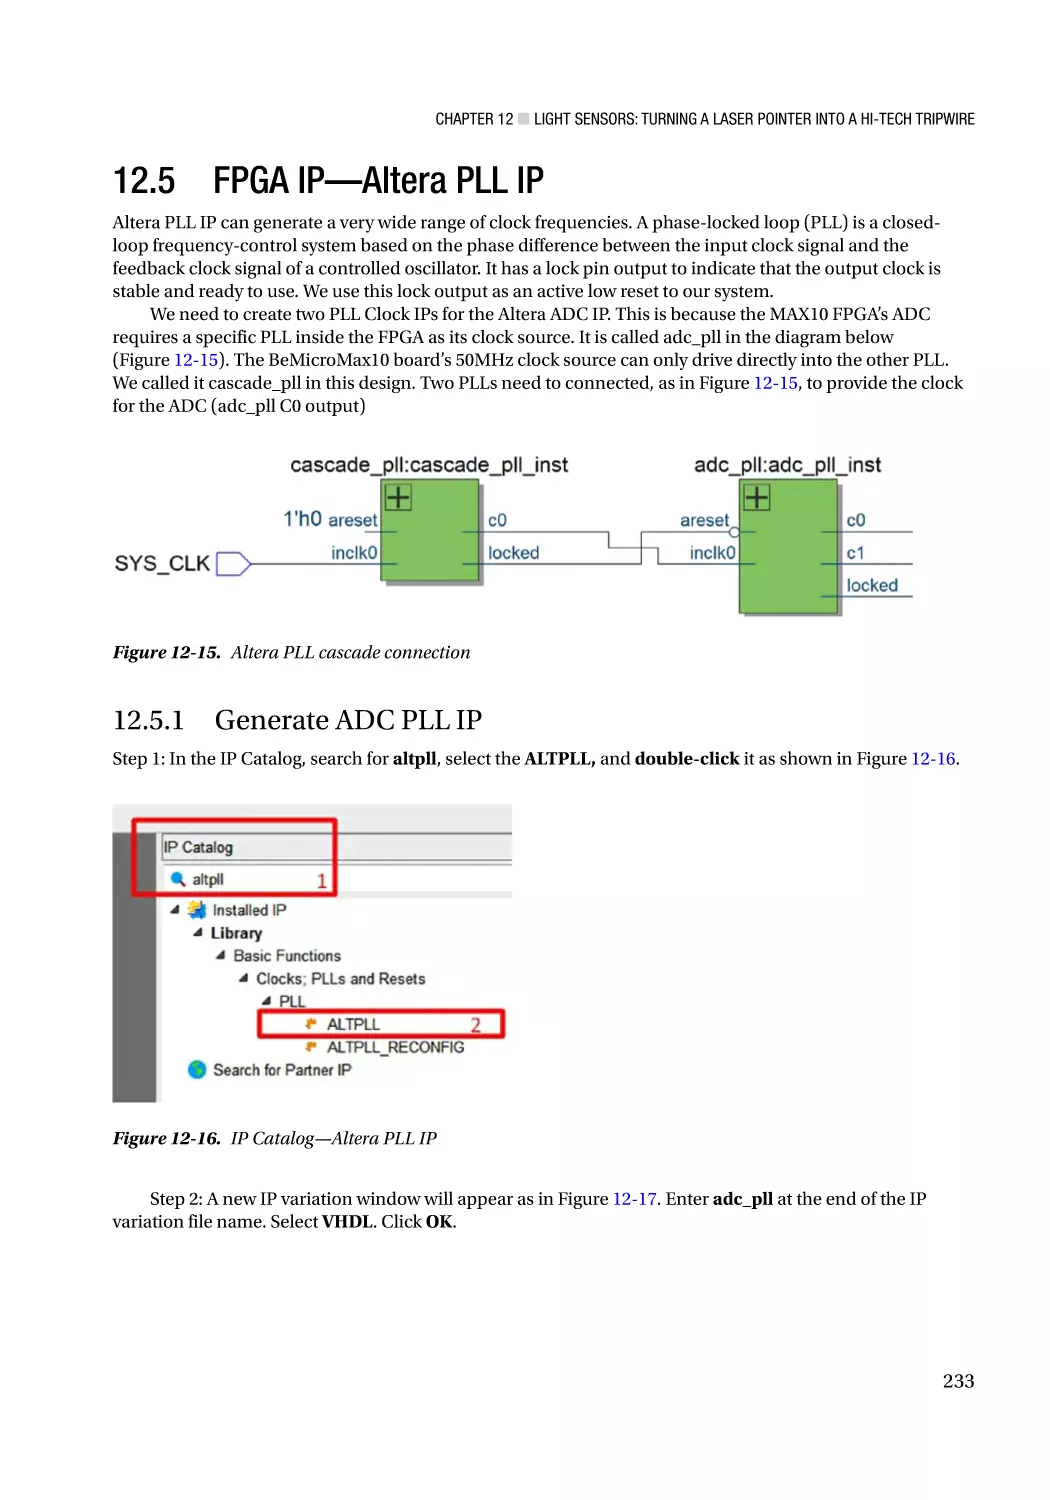 12.5 FPGA IP—Altera PLL IP
12.5.1 Generate ADC PLL IP